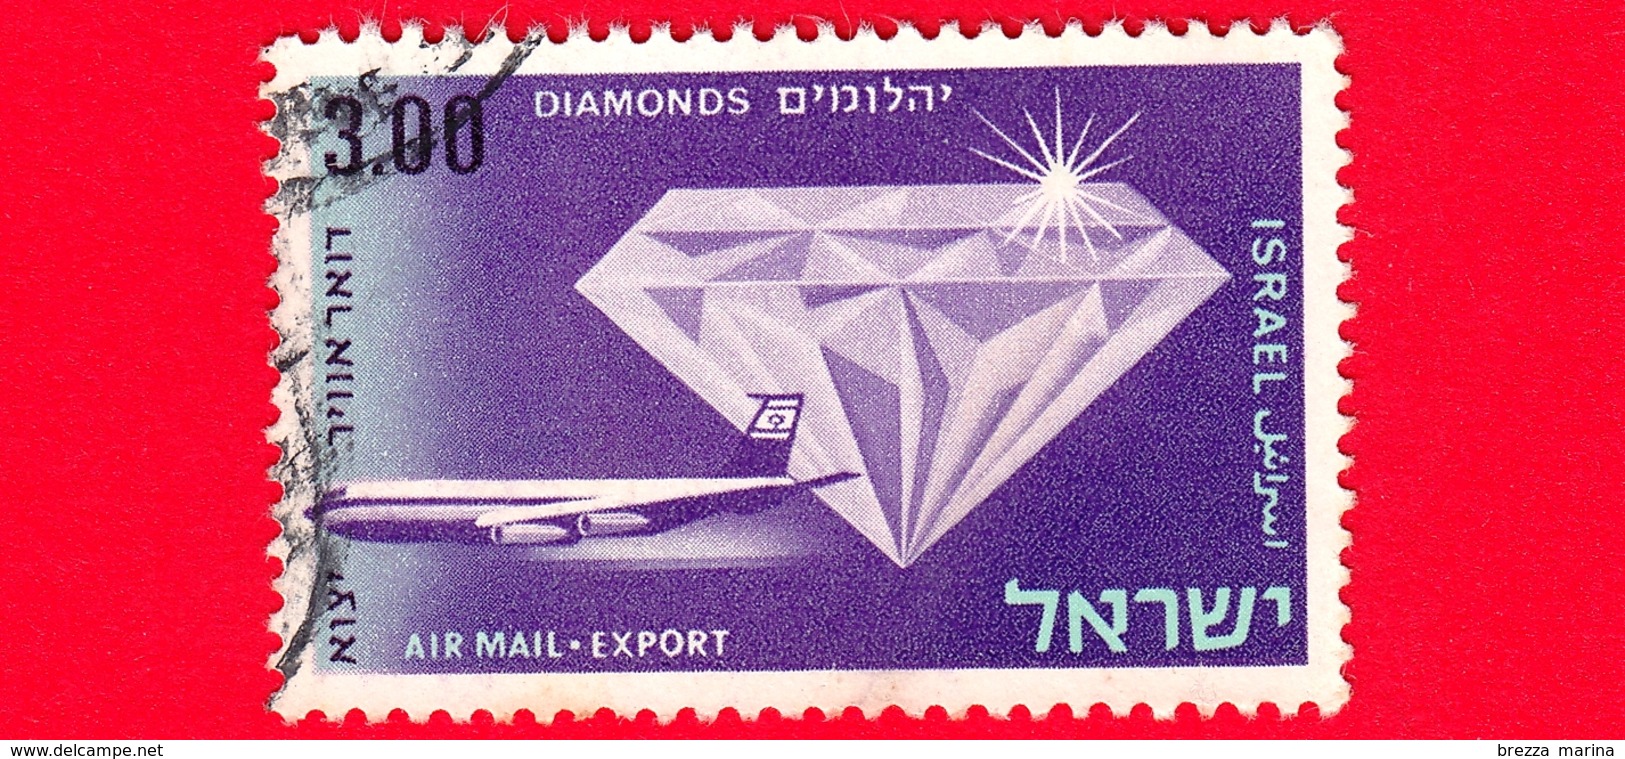 ISRAELE - Usato - 1968 - Esportazioni Israeliane : Diamanti - Diamonds - 3.00 - P. Aerea - Posta Aerea